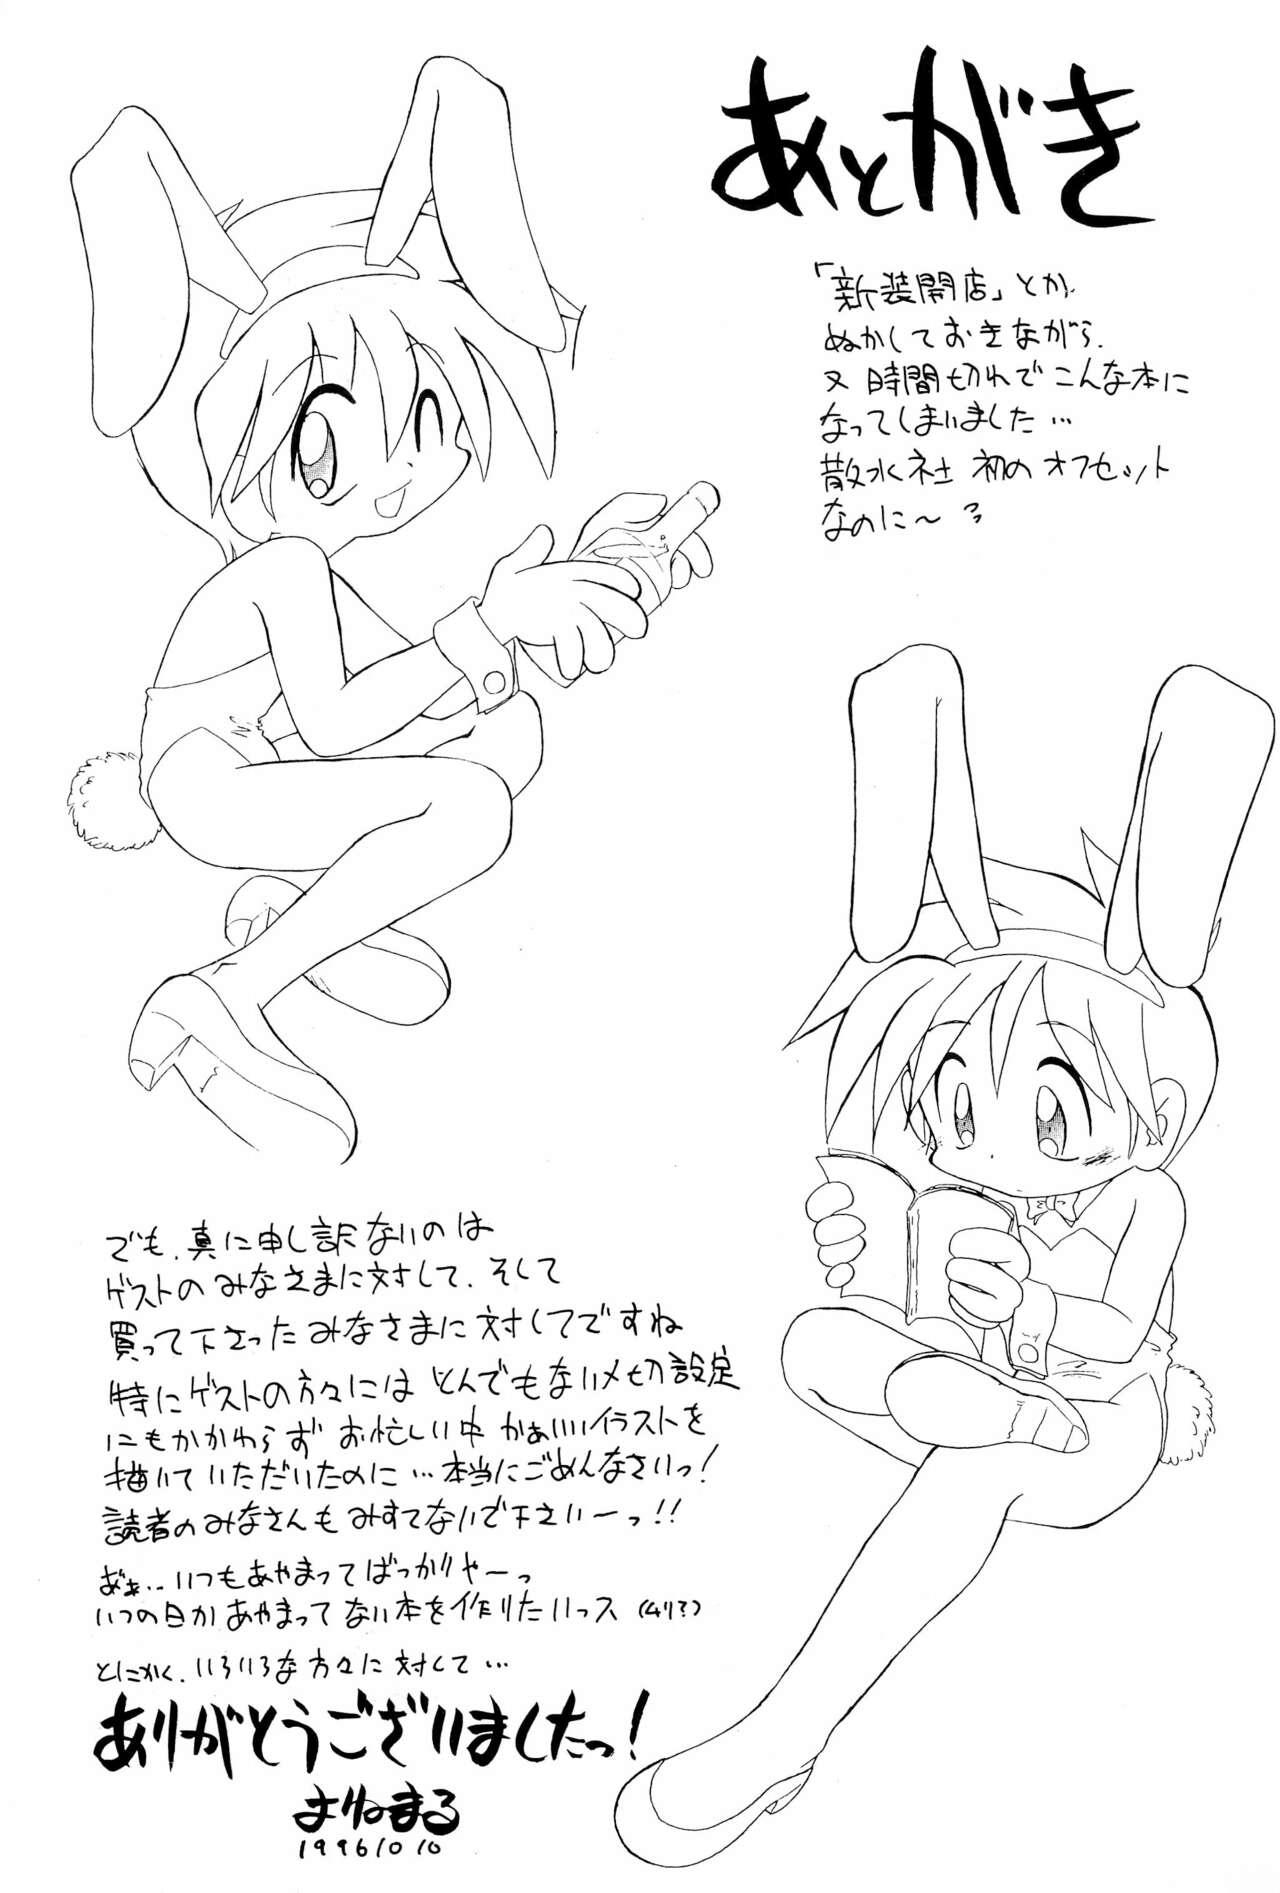 Burney’s Bunny Shop Shinsoukaiten! 20